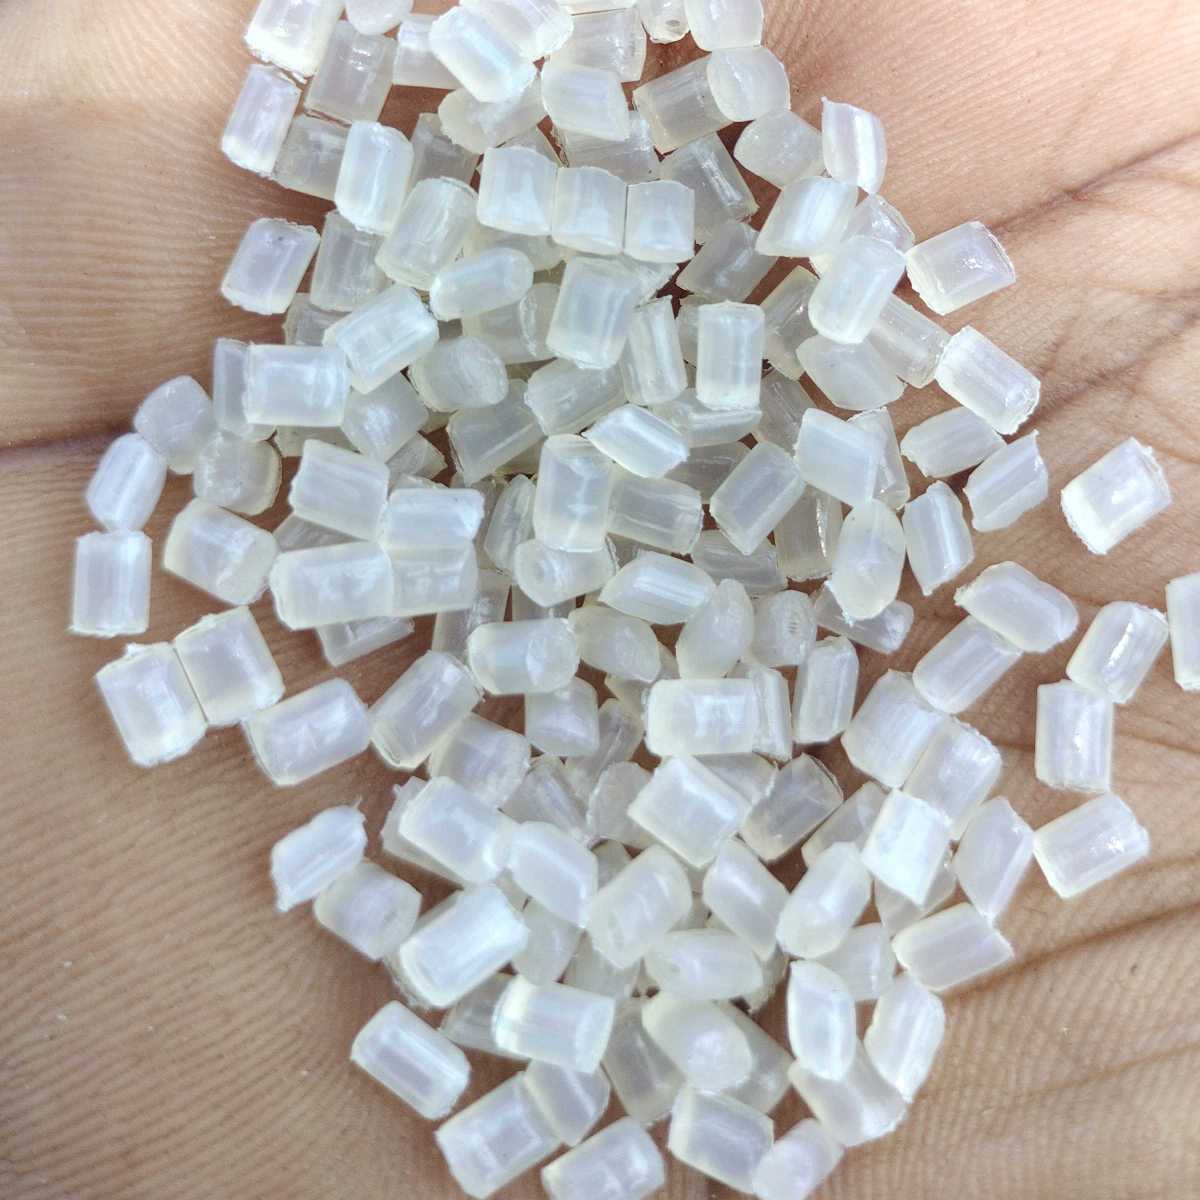 Sanjay Shrjee Poly gujarat india Plastic4trade